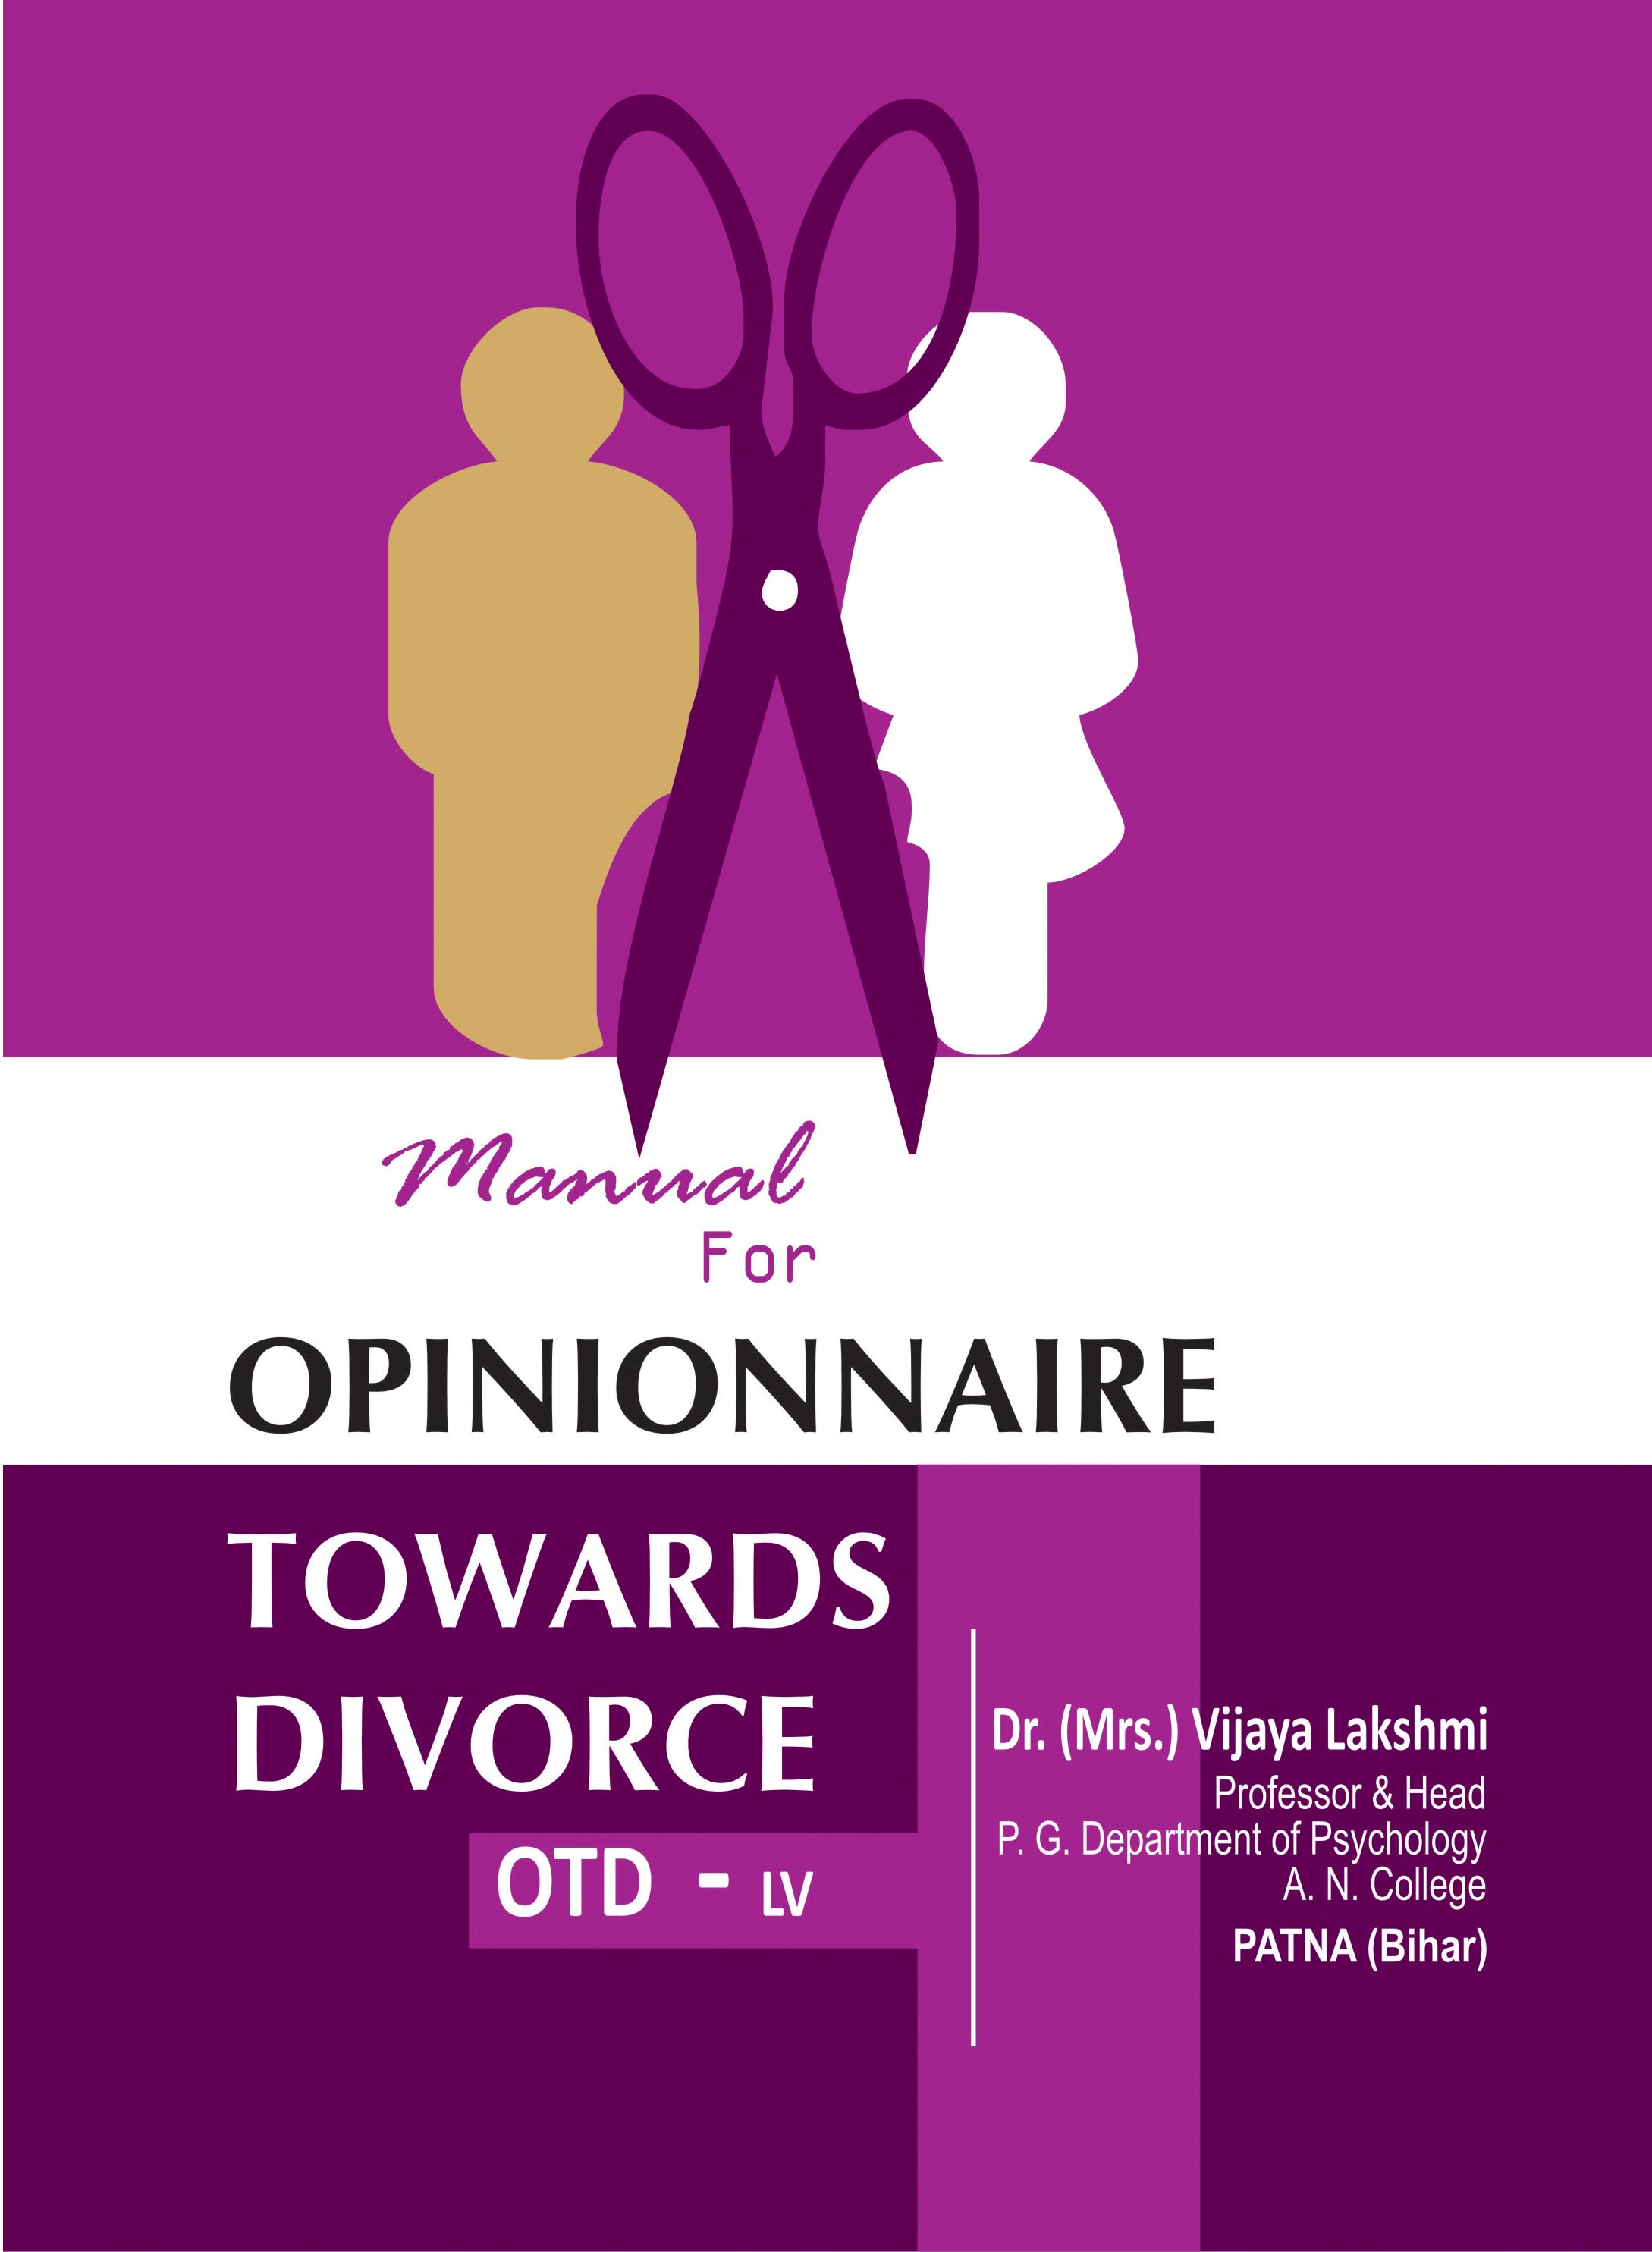 OPINIONNAIRE-TOWARDS-DIVORCE